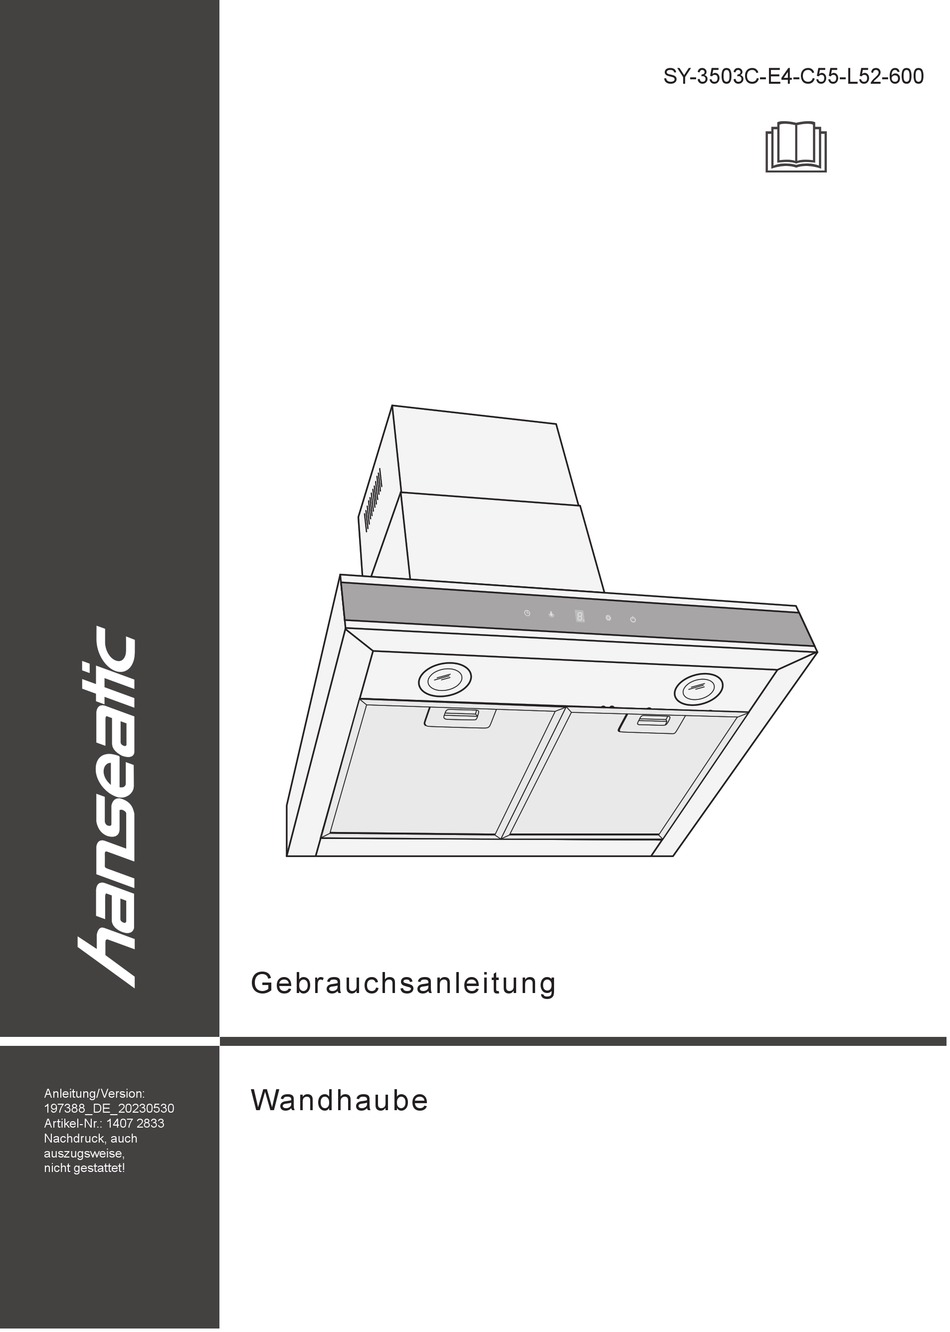 Bohrlöcher Setzen; Hanseatic User ManualsLib - SY Manual 18] -3503C-E4-C55-L52-600 Anbringen [Page Dunstabzugshaube 